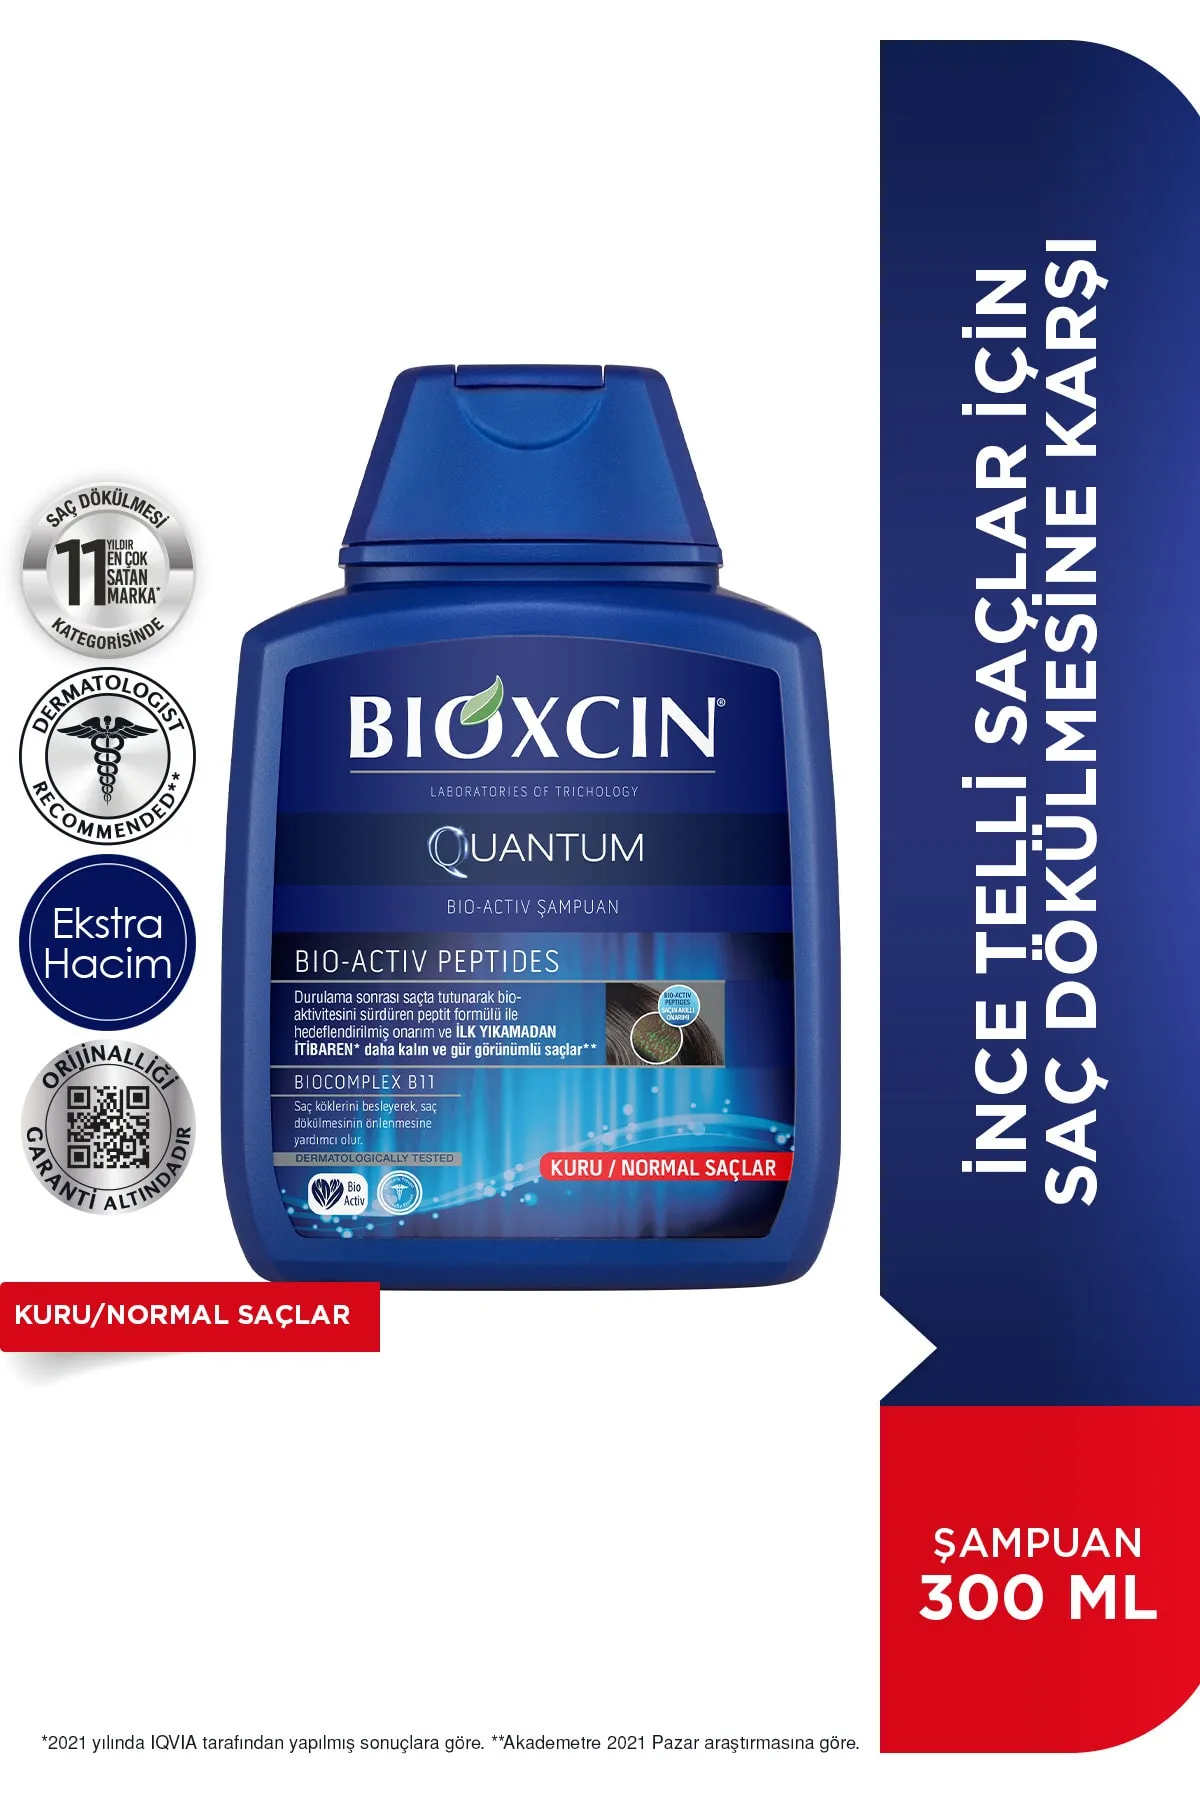 BIOXCIN Quantum Şampuan 300 ml - Kuru ve Normal Saçlar - 5